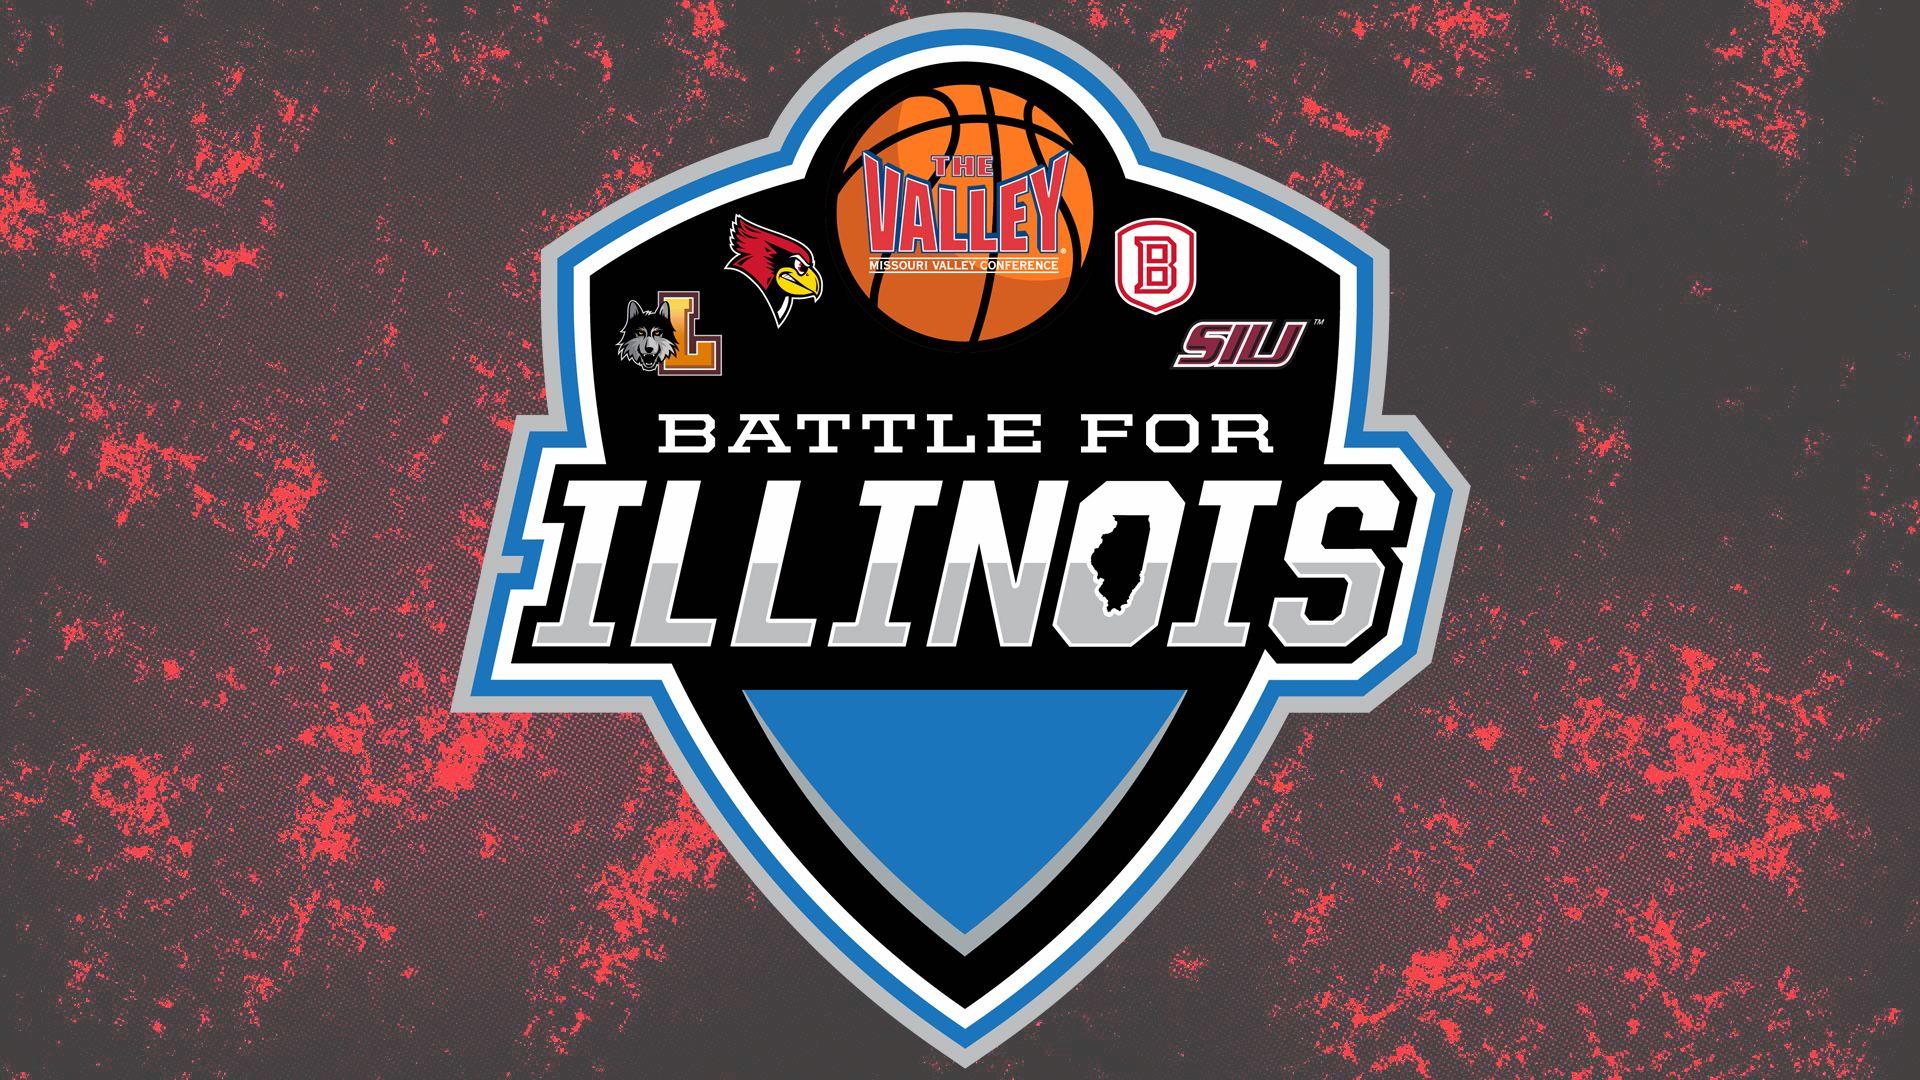 Illinois State Football Logo - Illinois State One of Four Universities Introducing “Battle